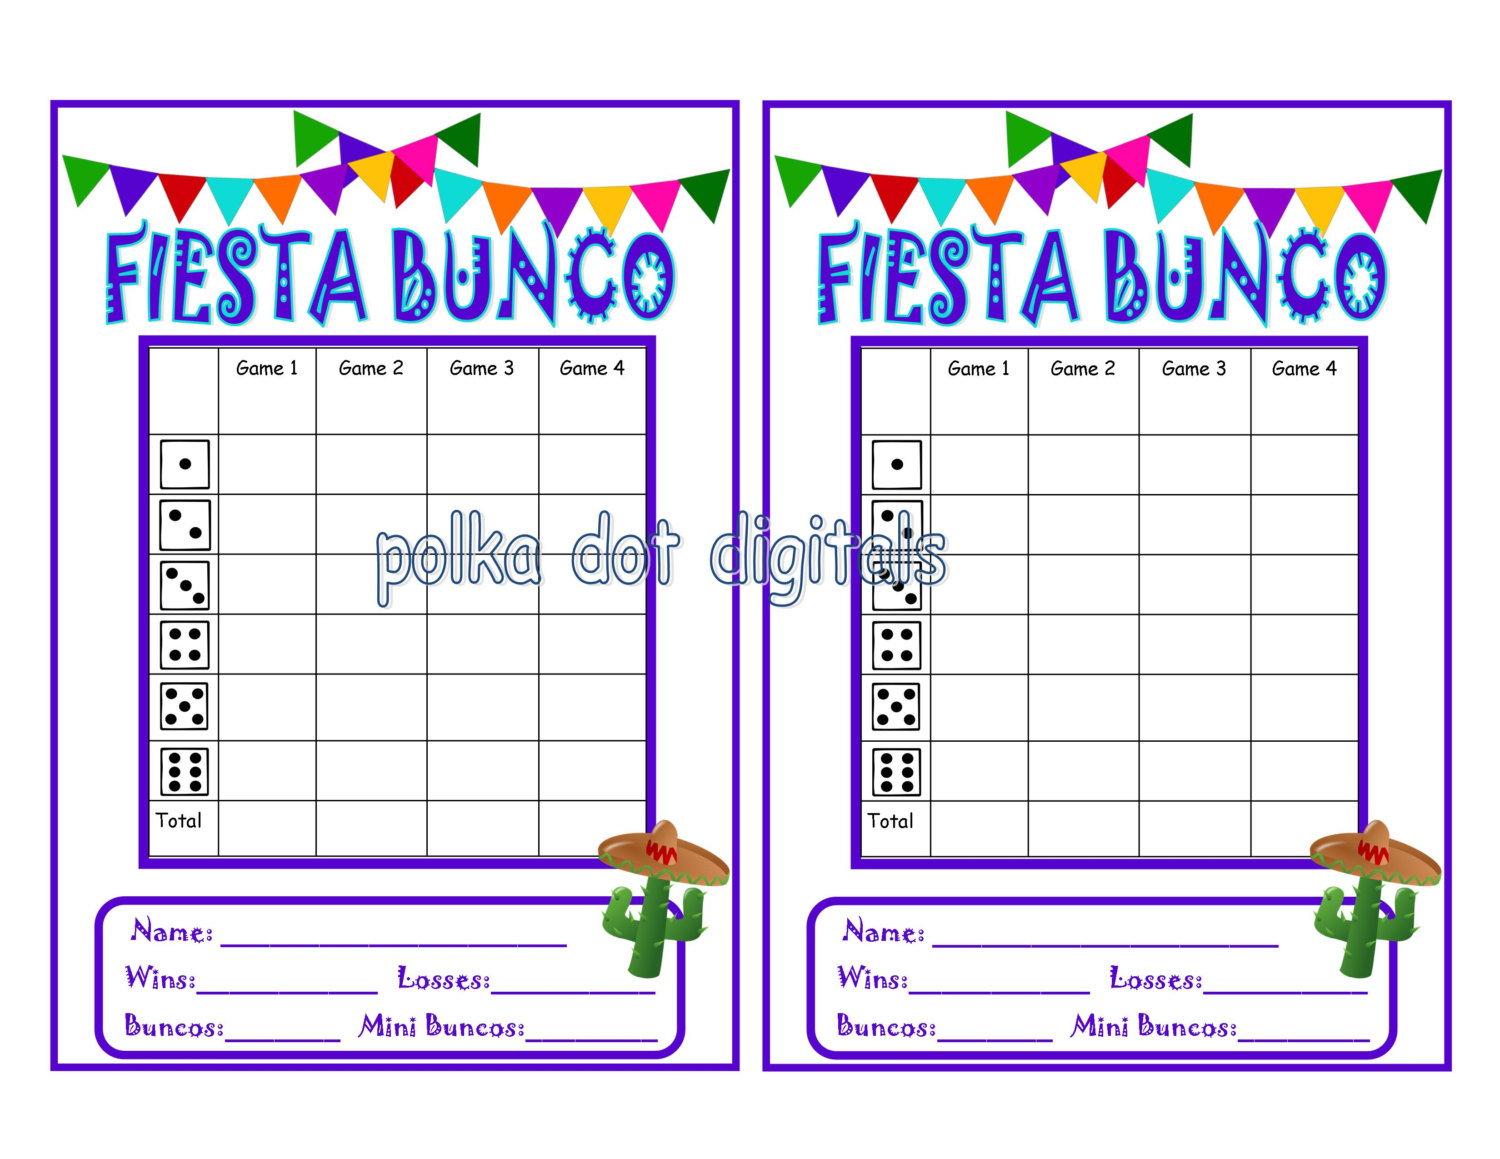 Buy 2 Get 1 Free FIESTA Bunco Score Card Sheet by PolkaDotDigitals